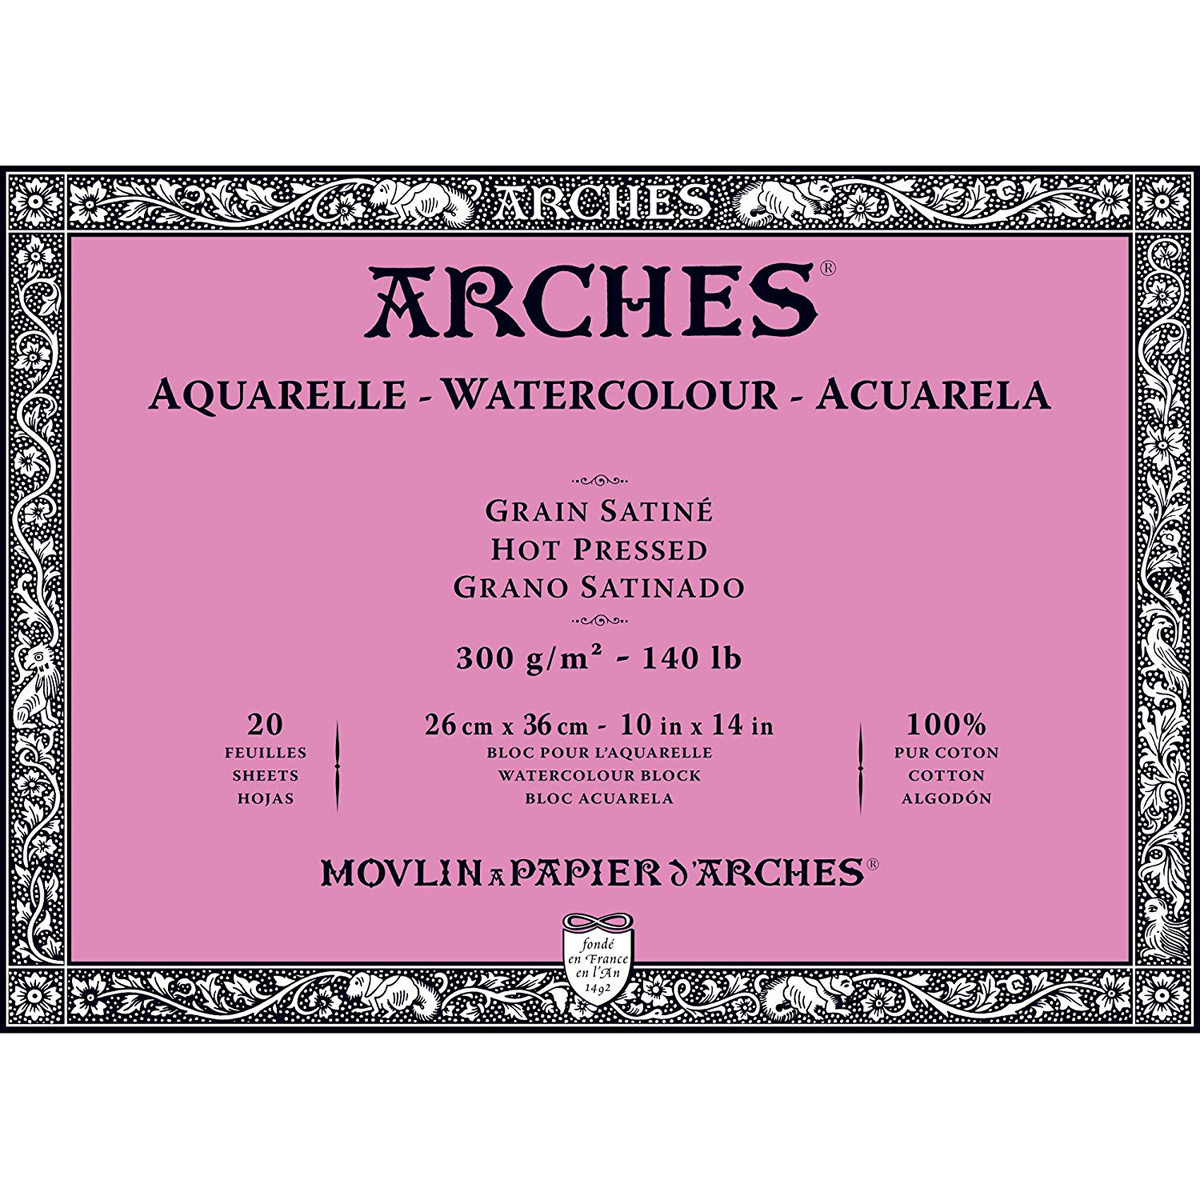 Arches Watercolour Hot Pressed Block 140lb, 10